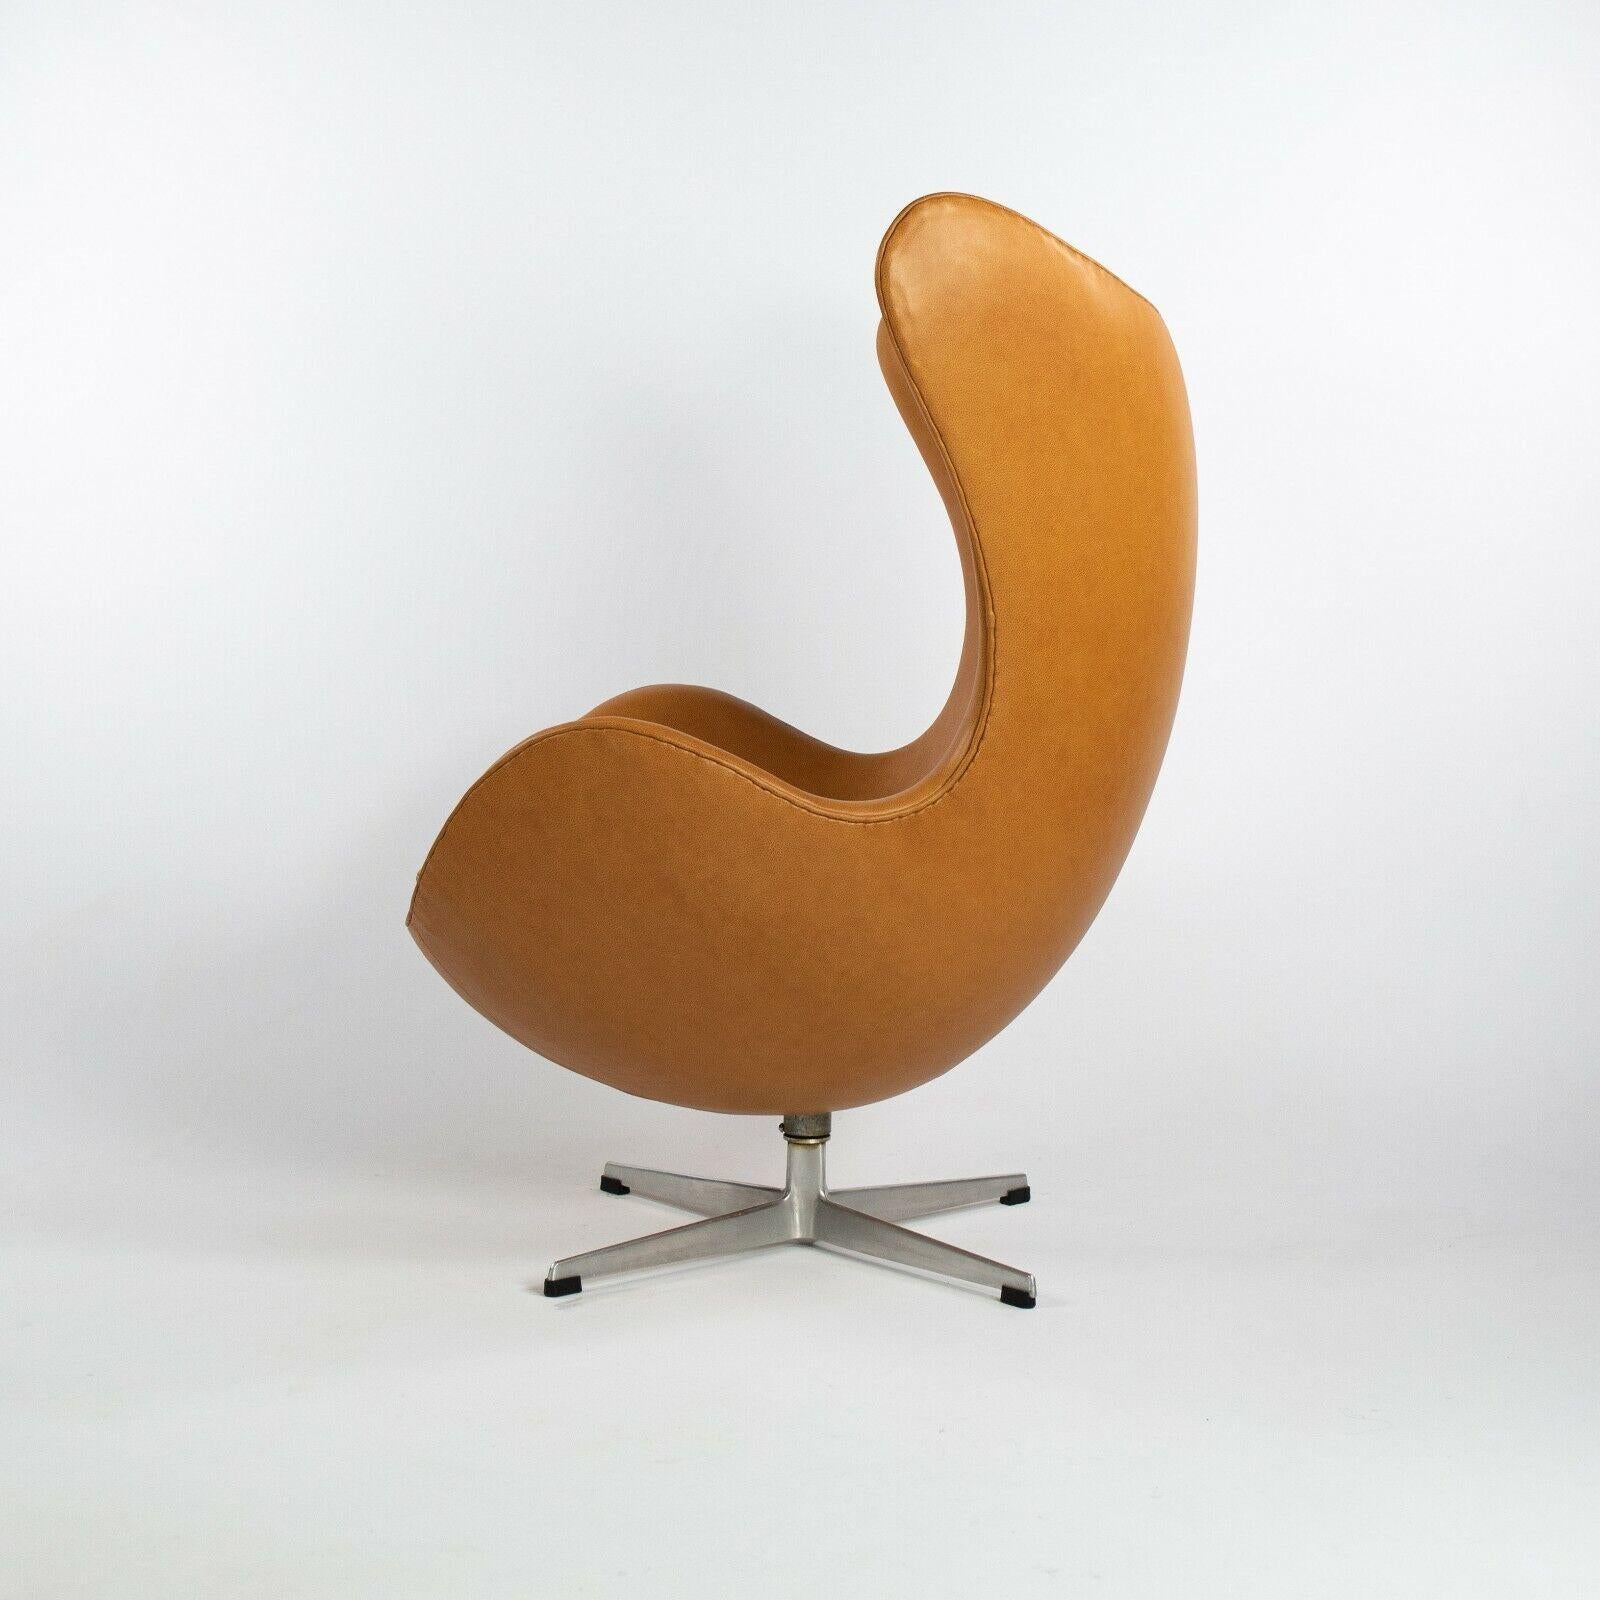 designer egg chair -china -b2b -forum -blog -wikipedia -.cn -.gov -alibaba